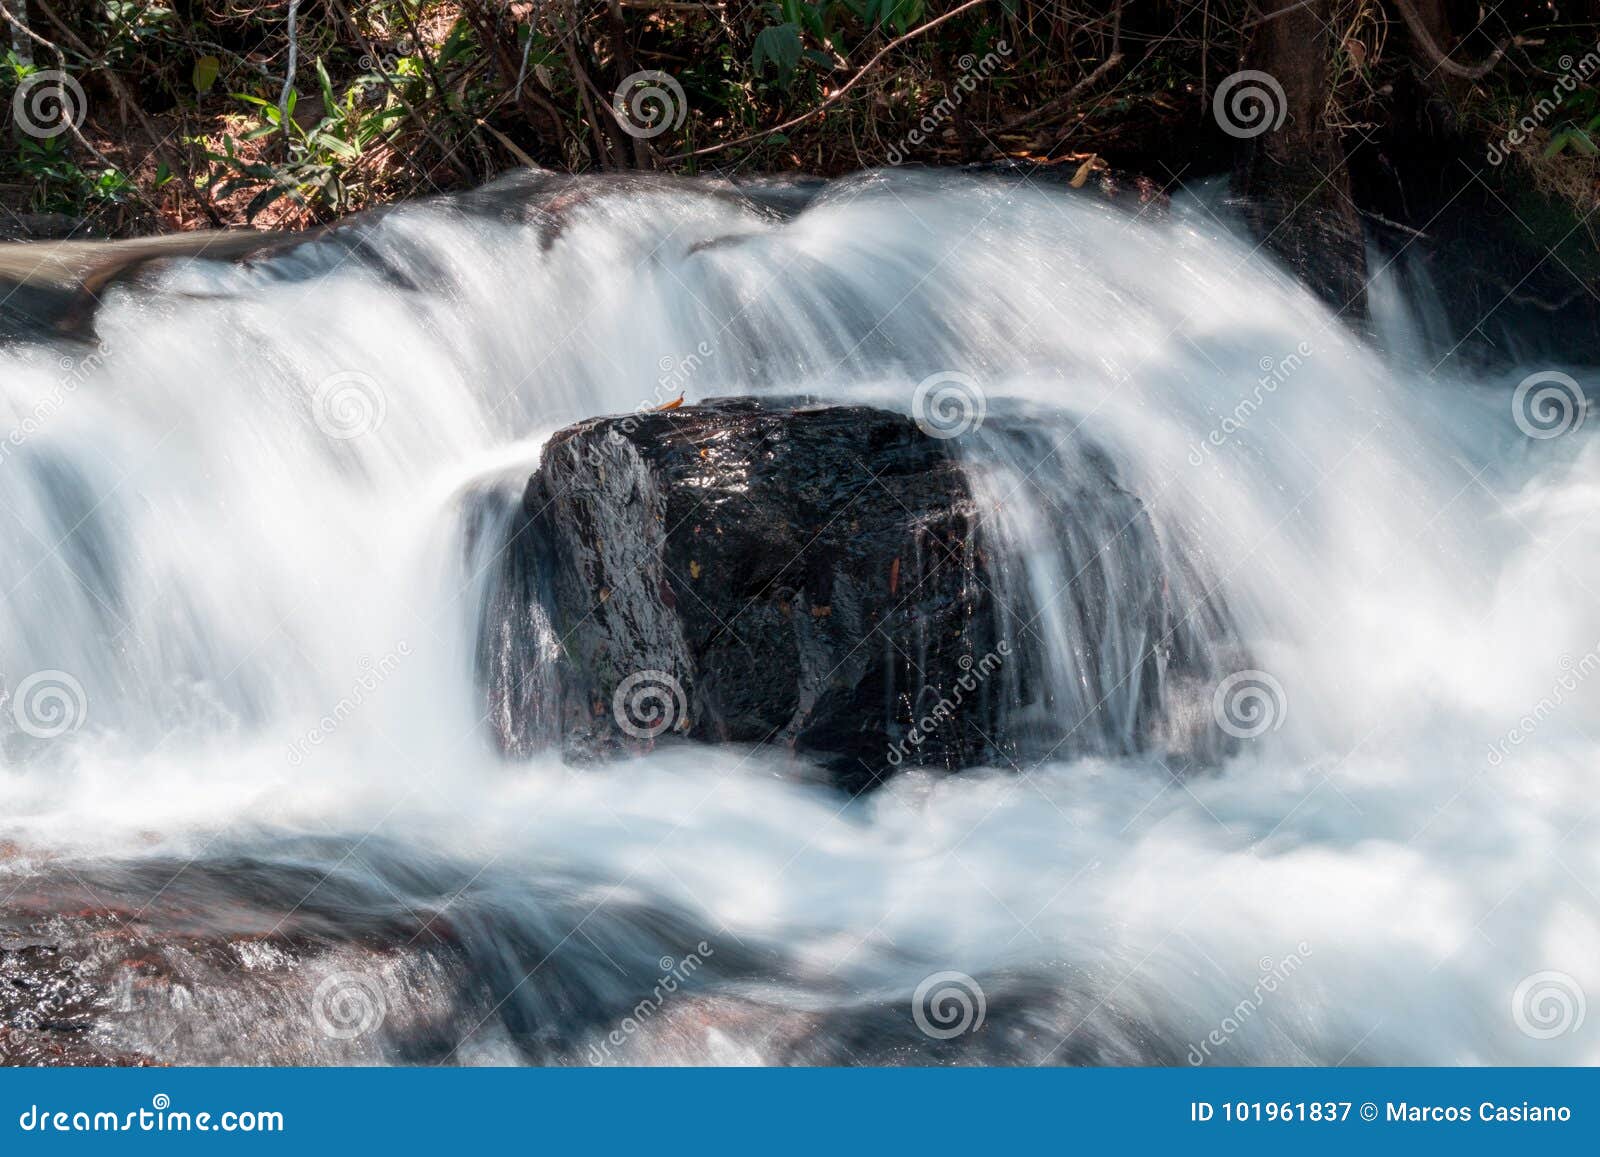 indaia waterfall